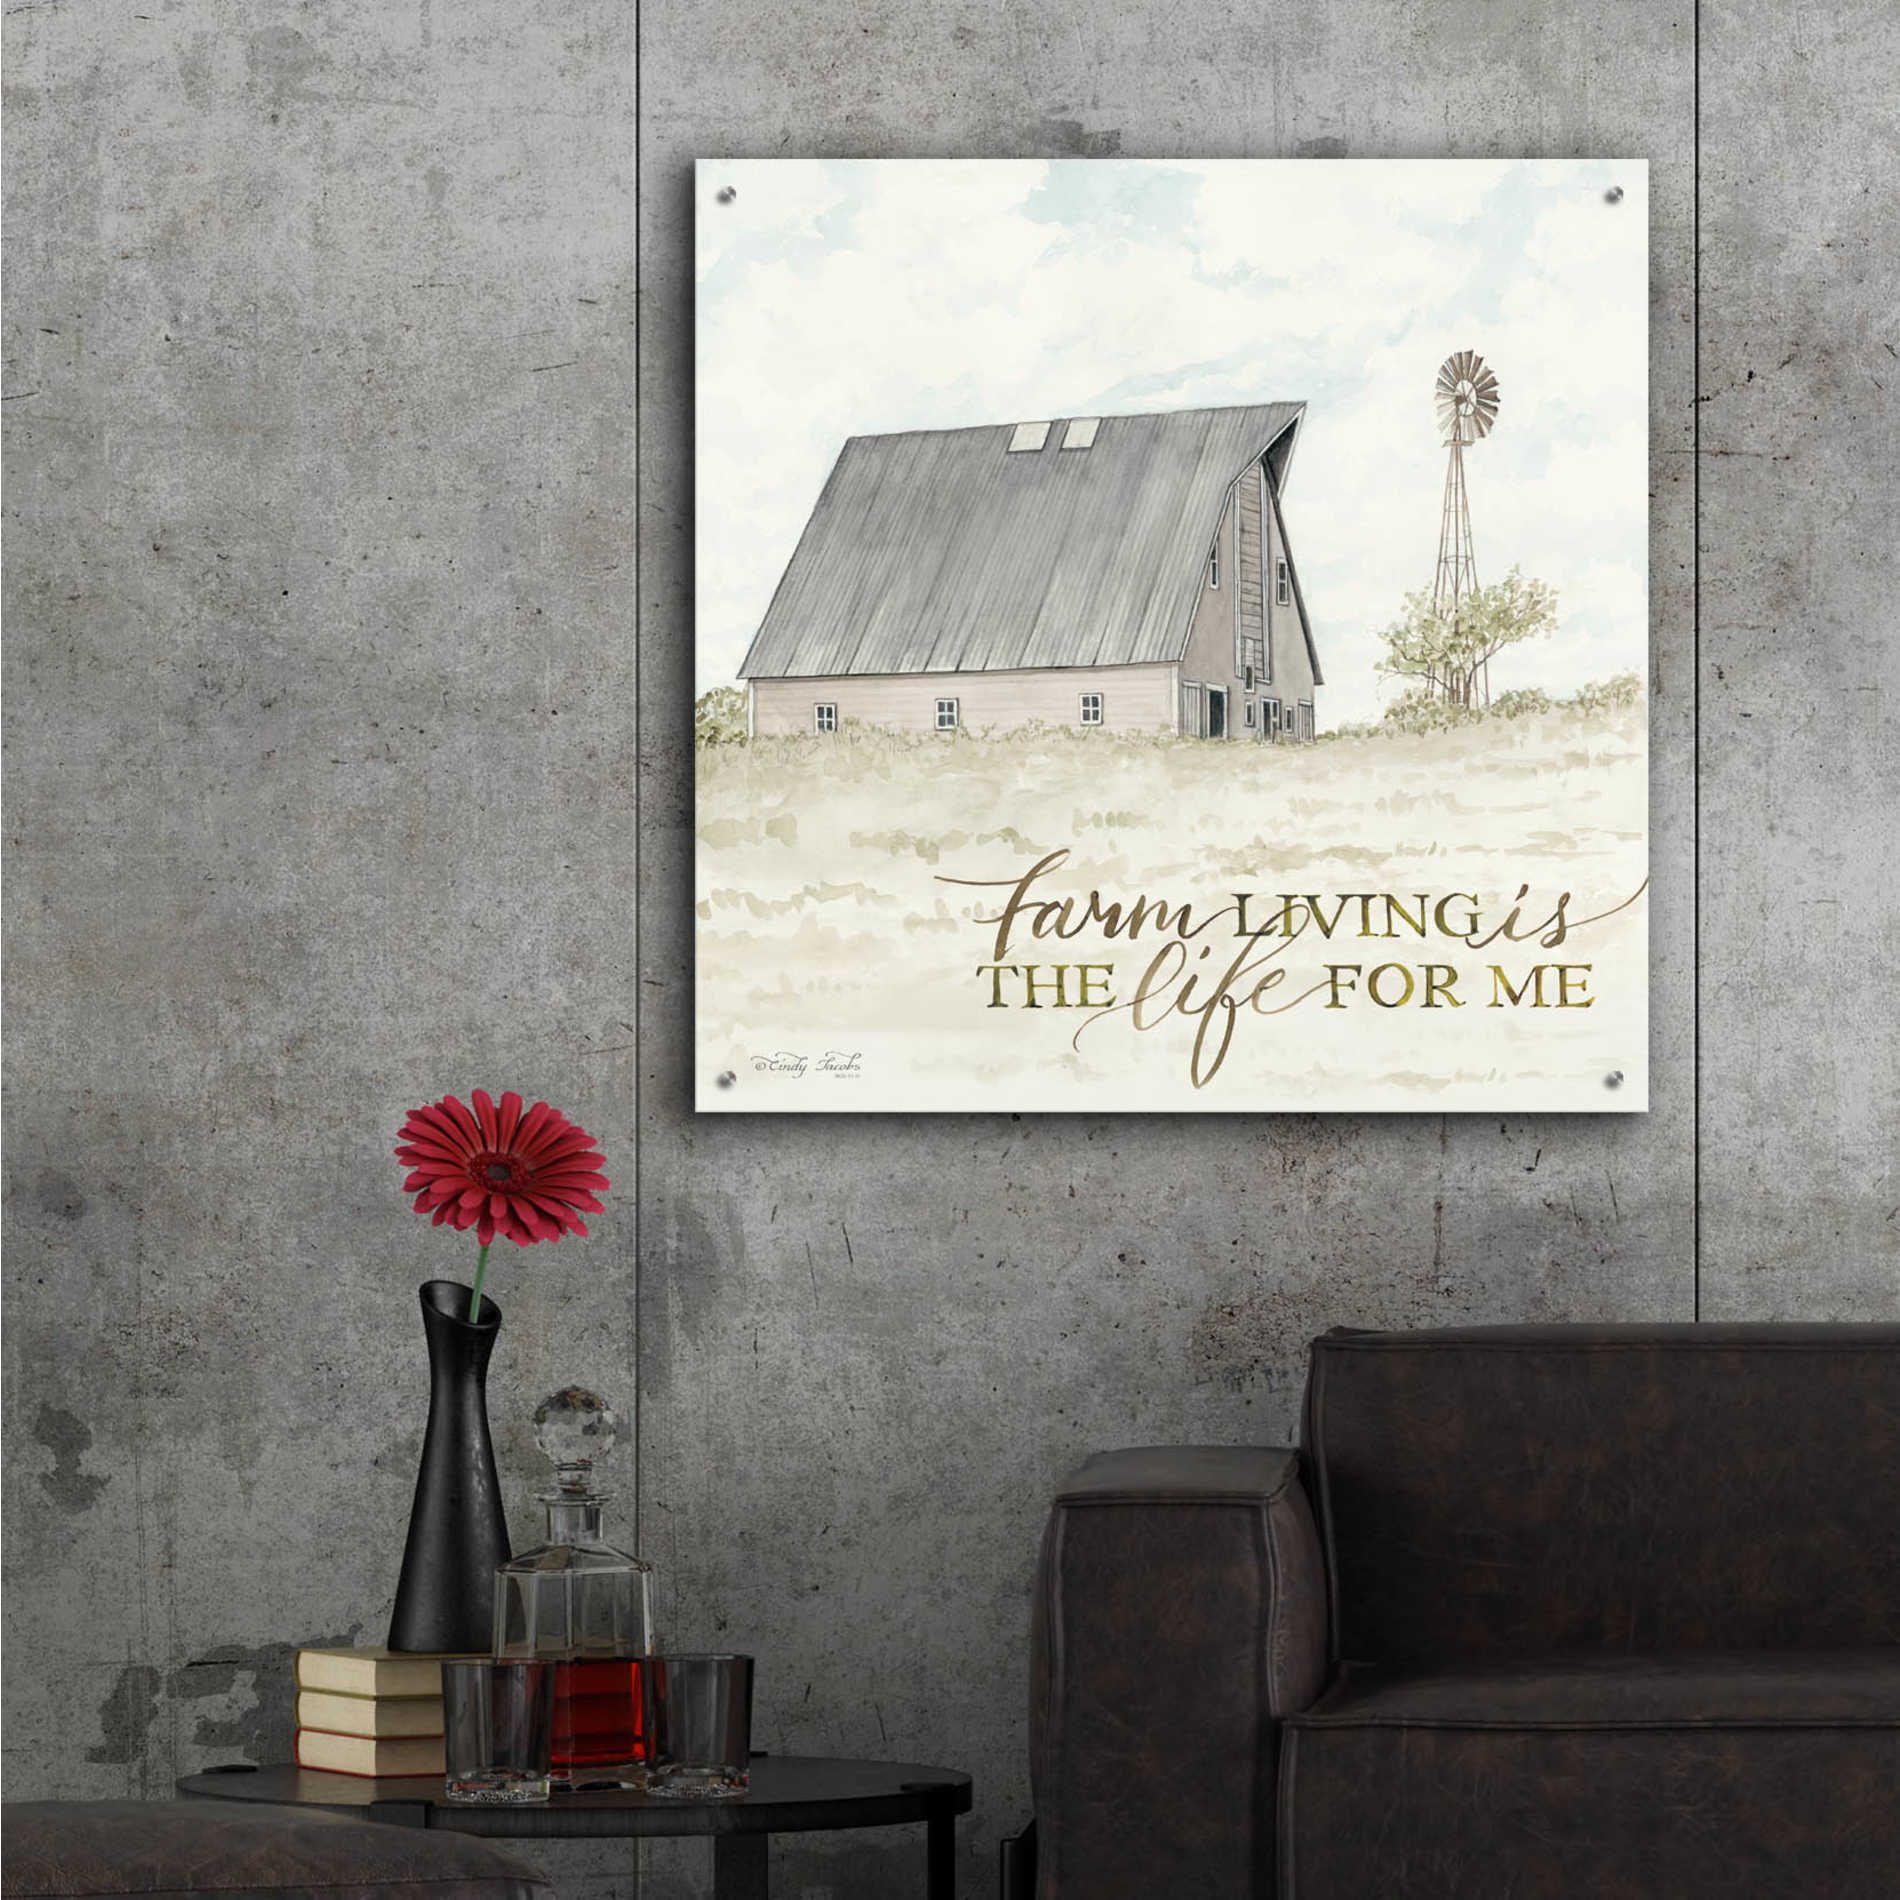 Epic Art 'Farm Living' by Cindy Jacobs, Acrylic Glass Wall Art,36x36